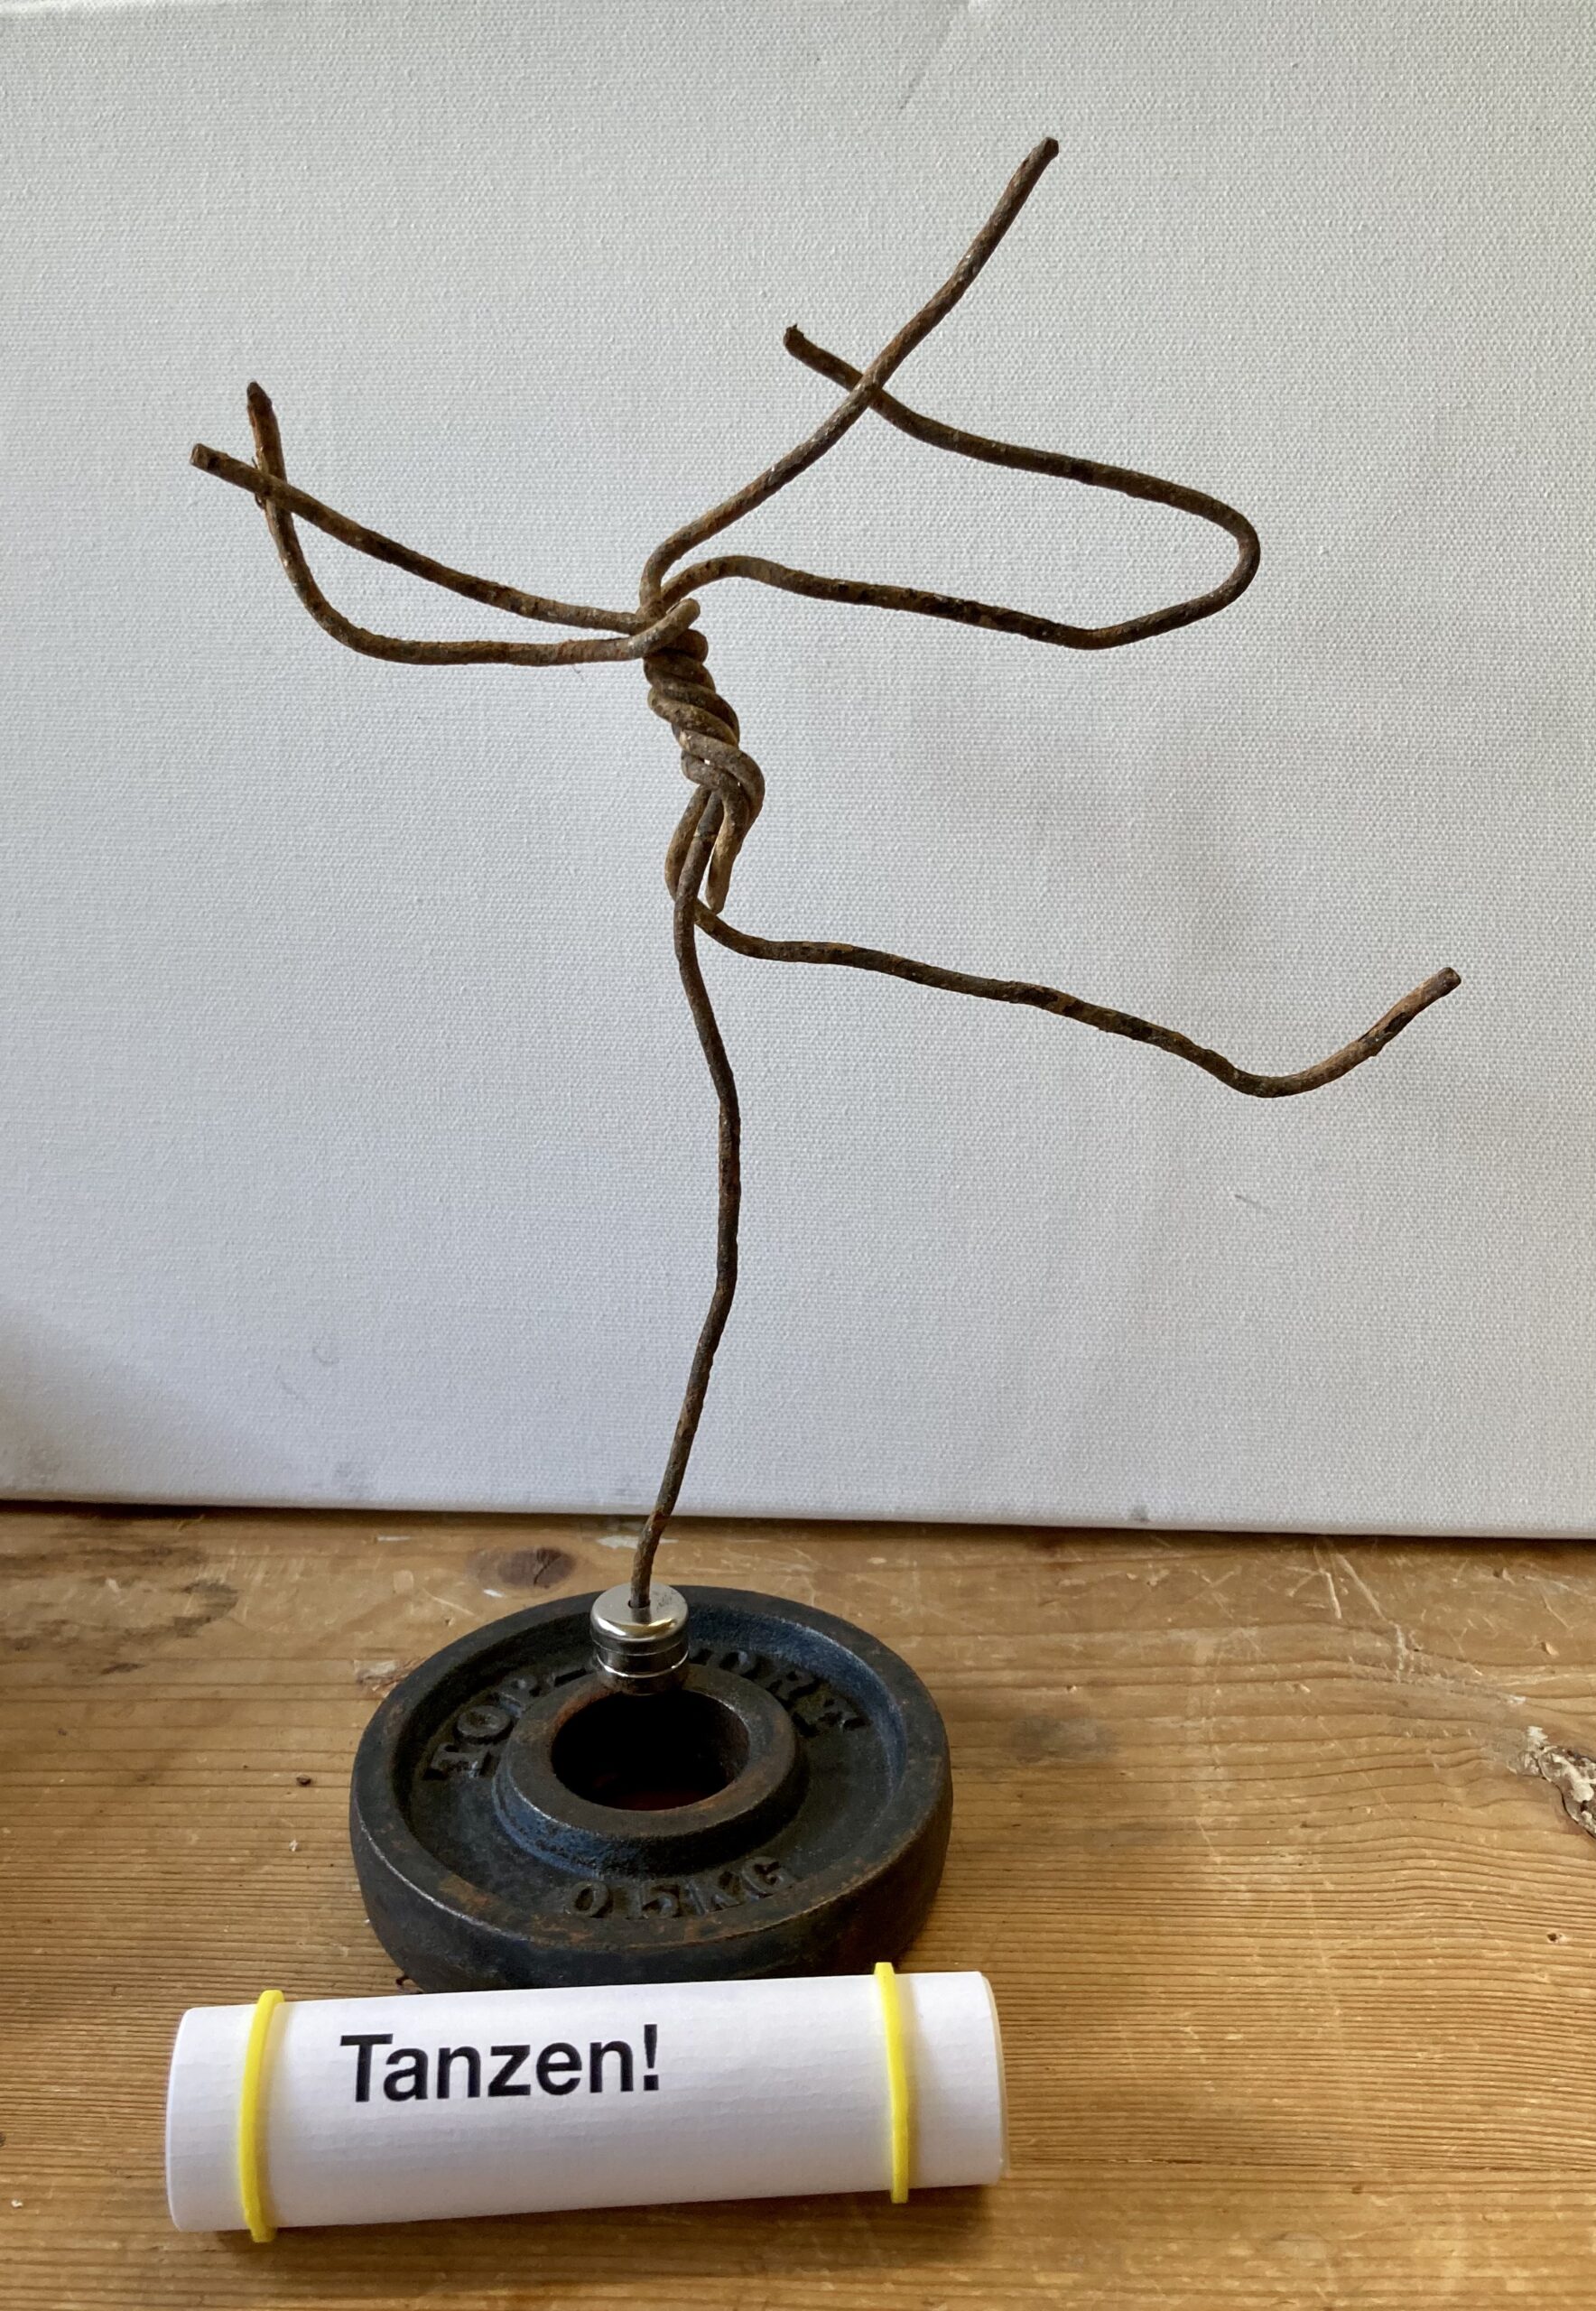 Rainer Leitz Artwork "Tanzen ohne Kopf" Readymade Art Object